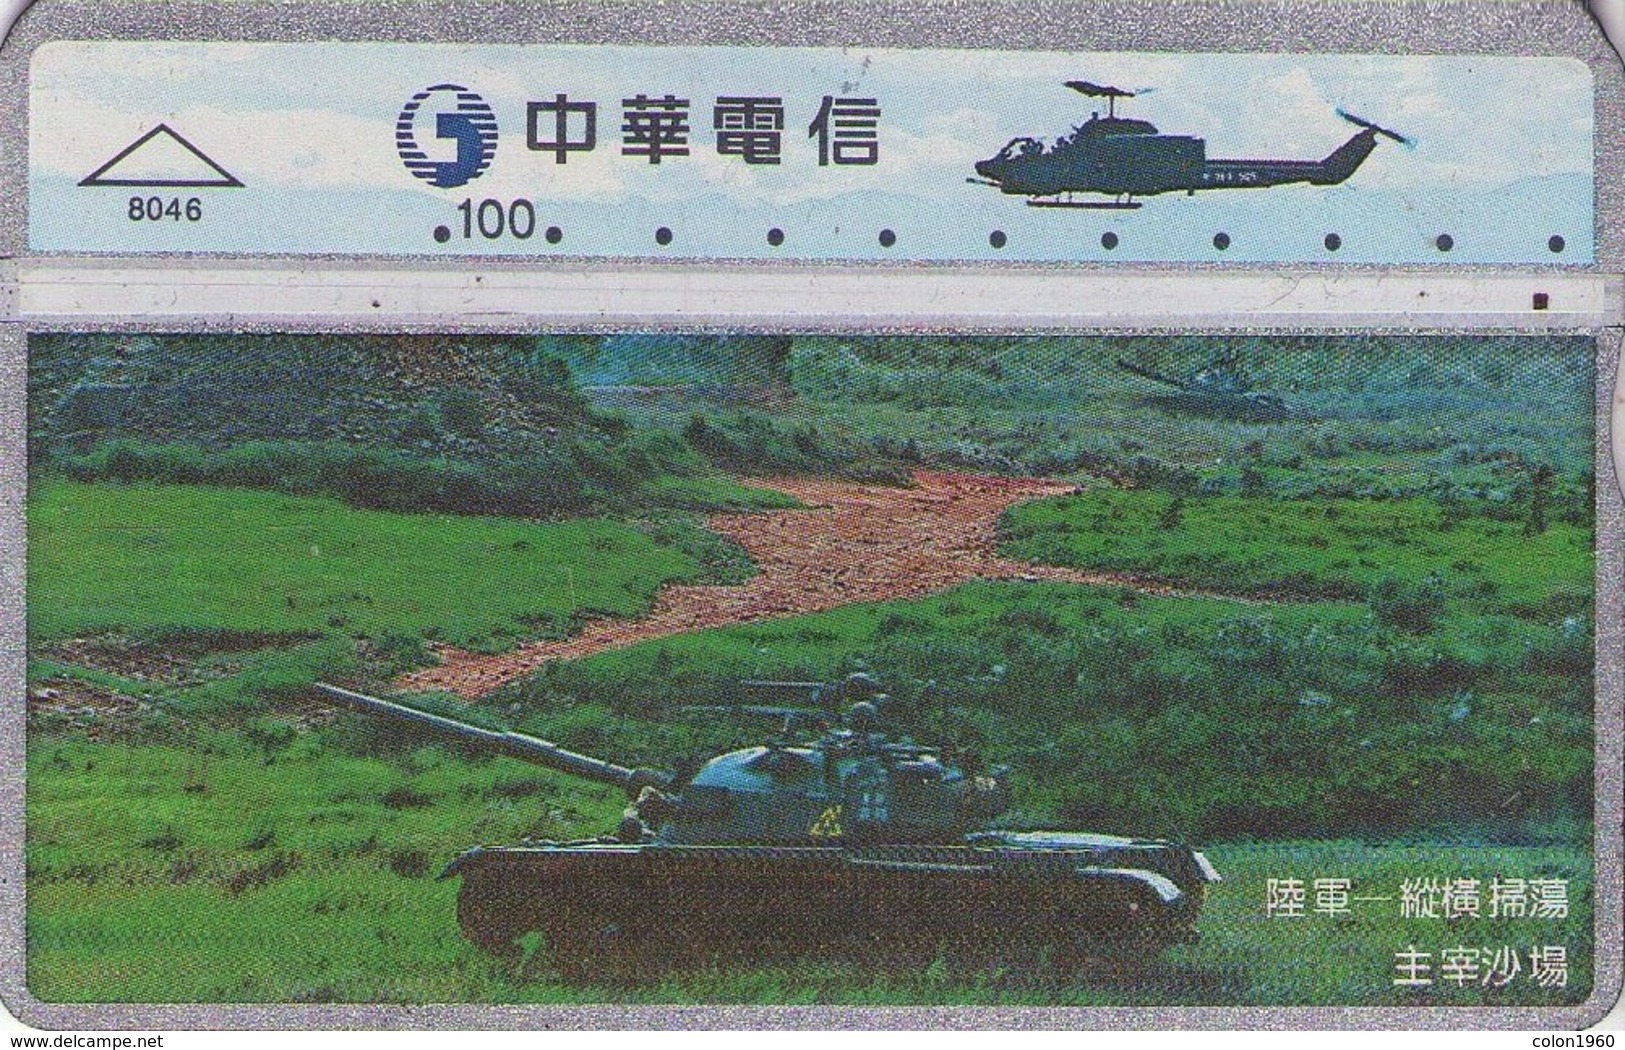 TAIWAN. 840K. ARMY - TANK. 8046. (119) - Leger